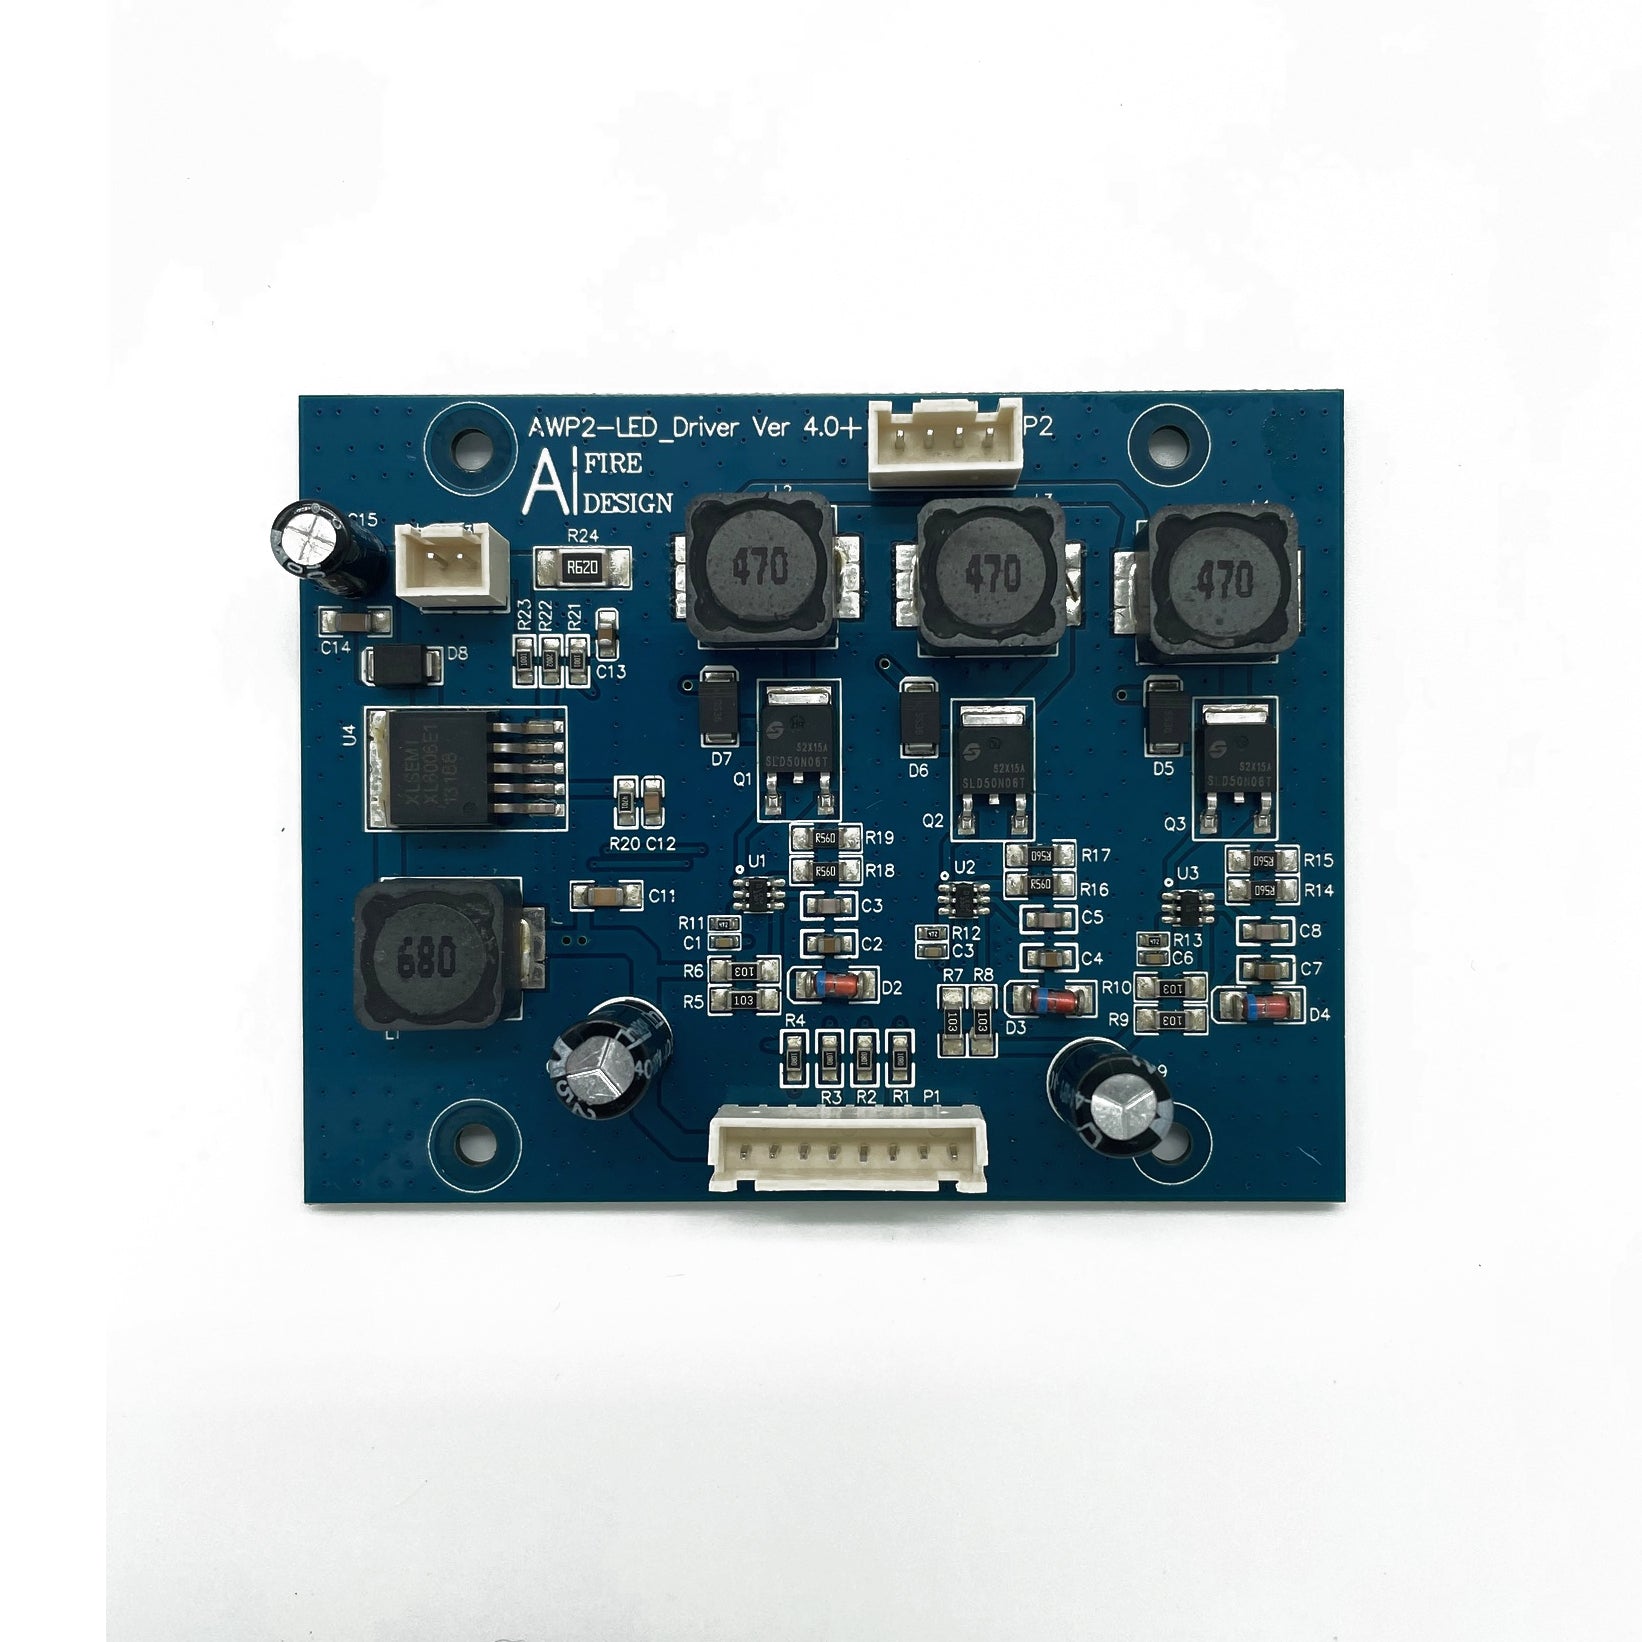 LED Driver Card for AWPR2 Series